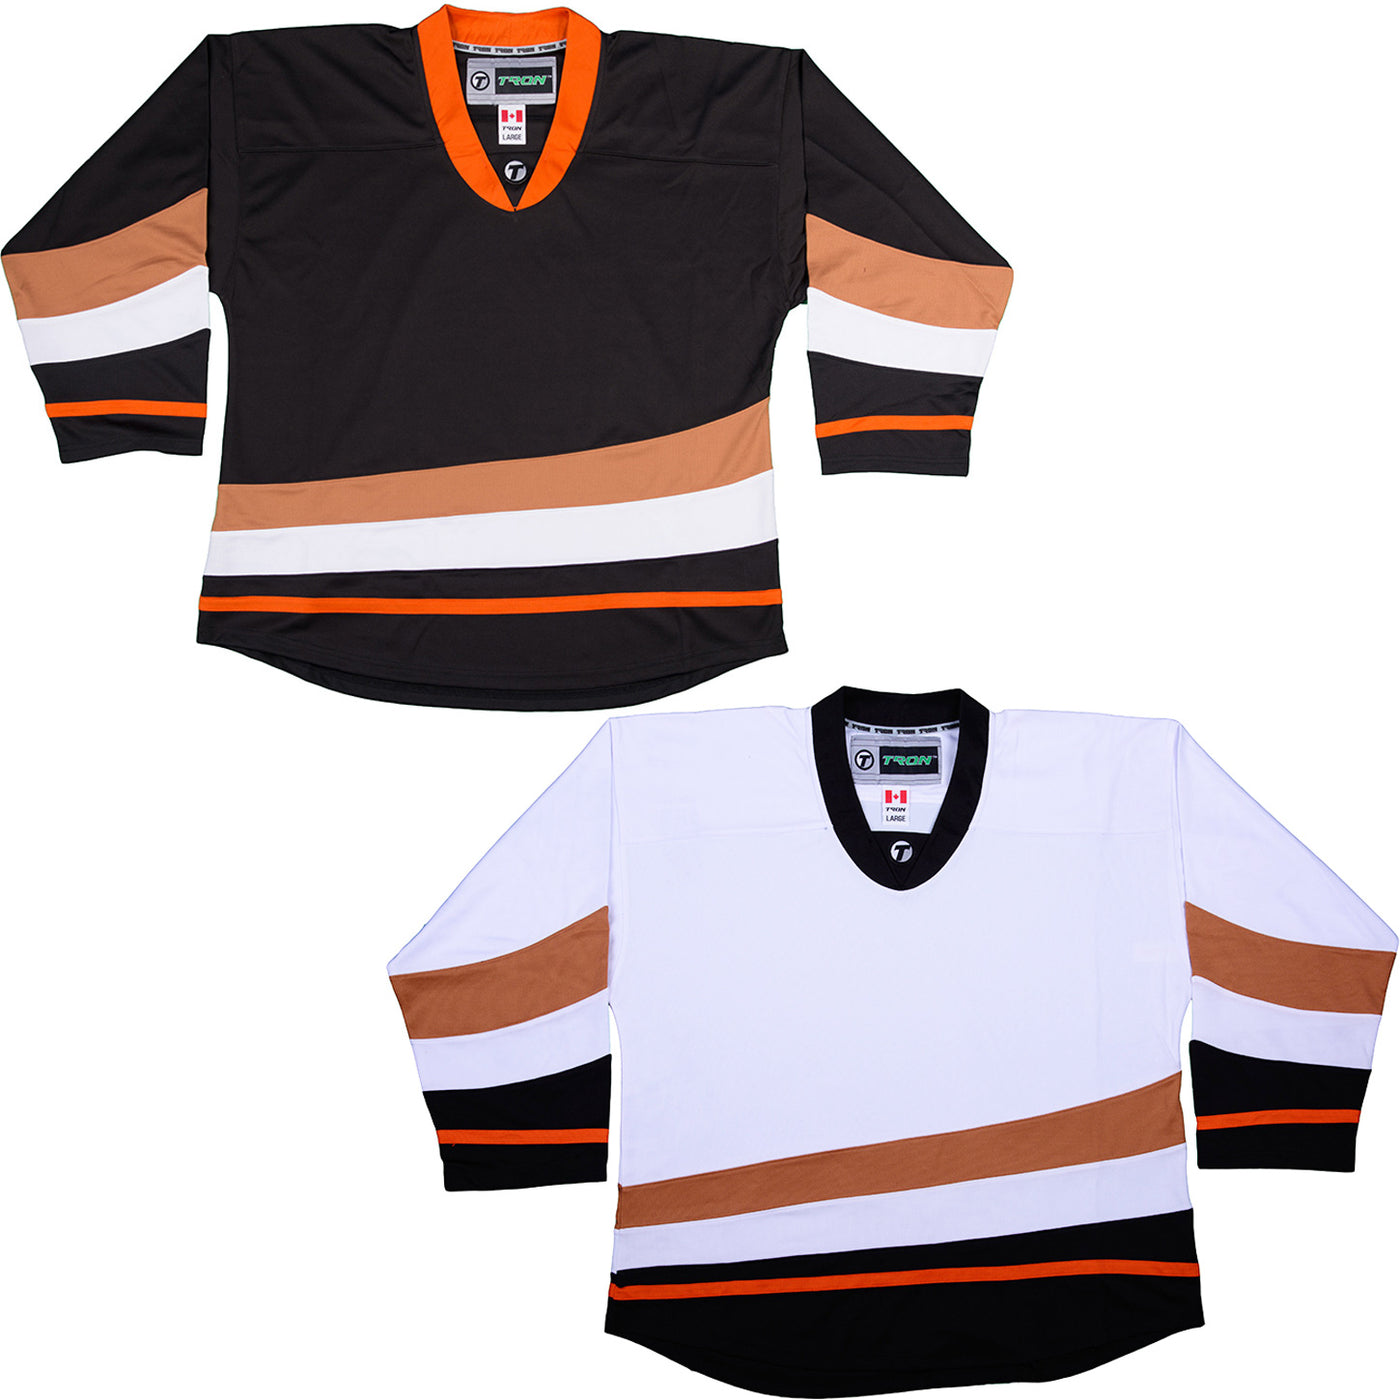 TronX Hockey Practice Jersey (Orange)